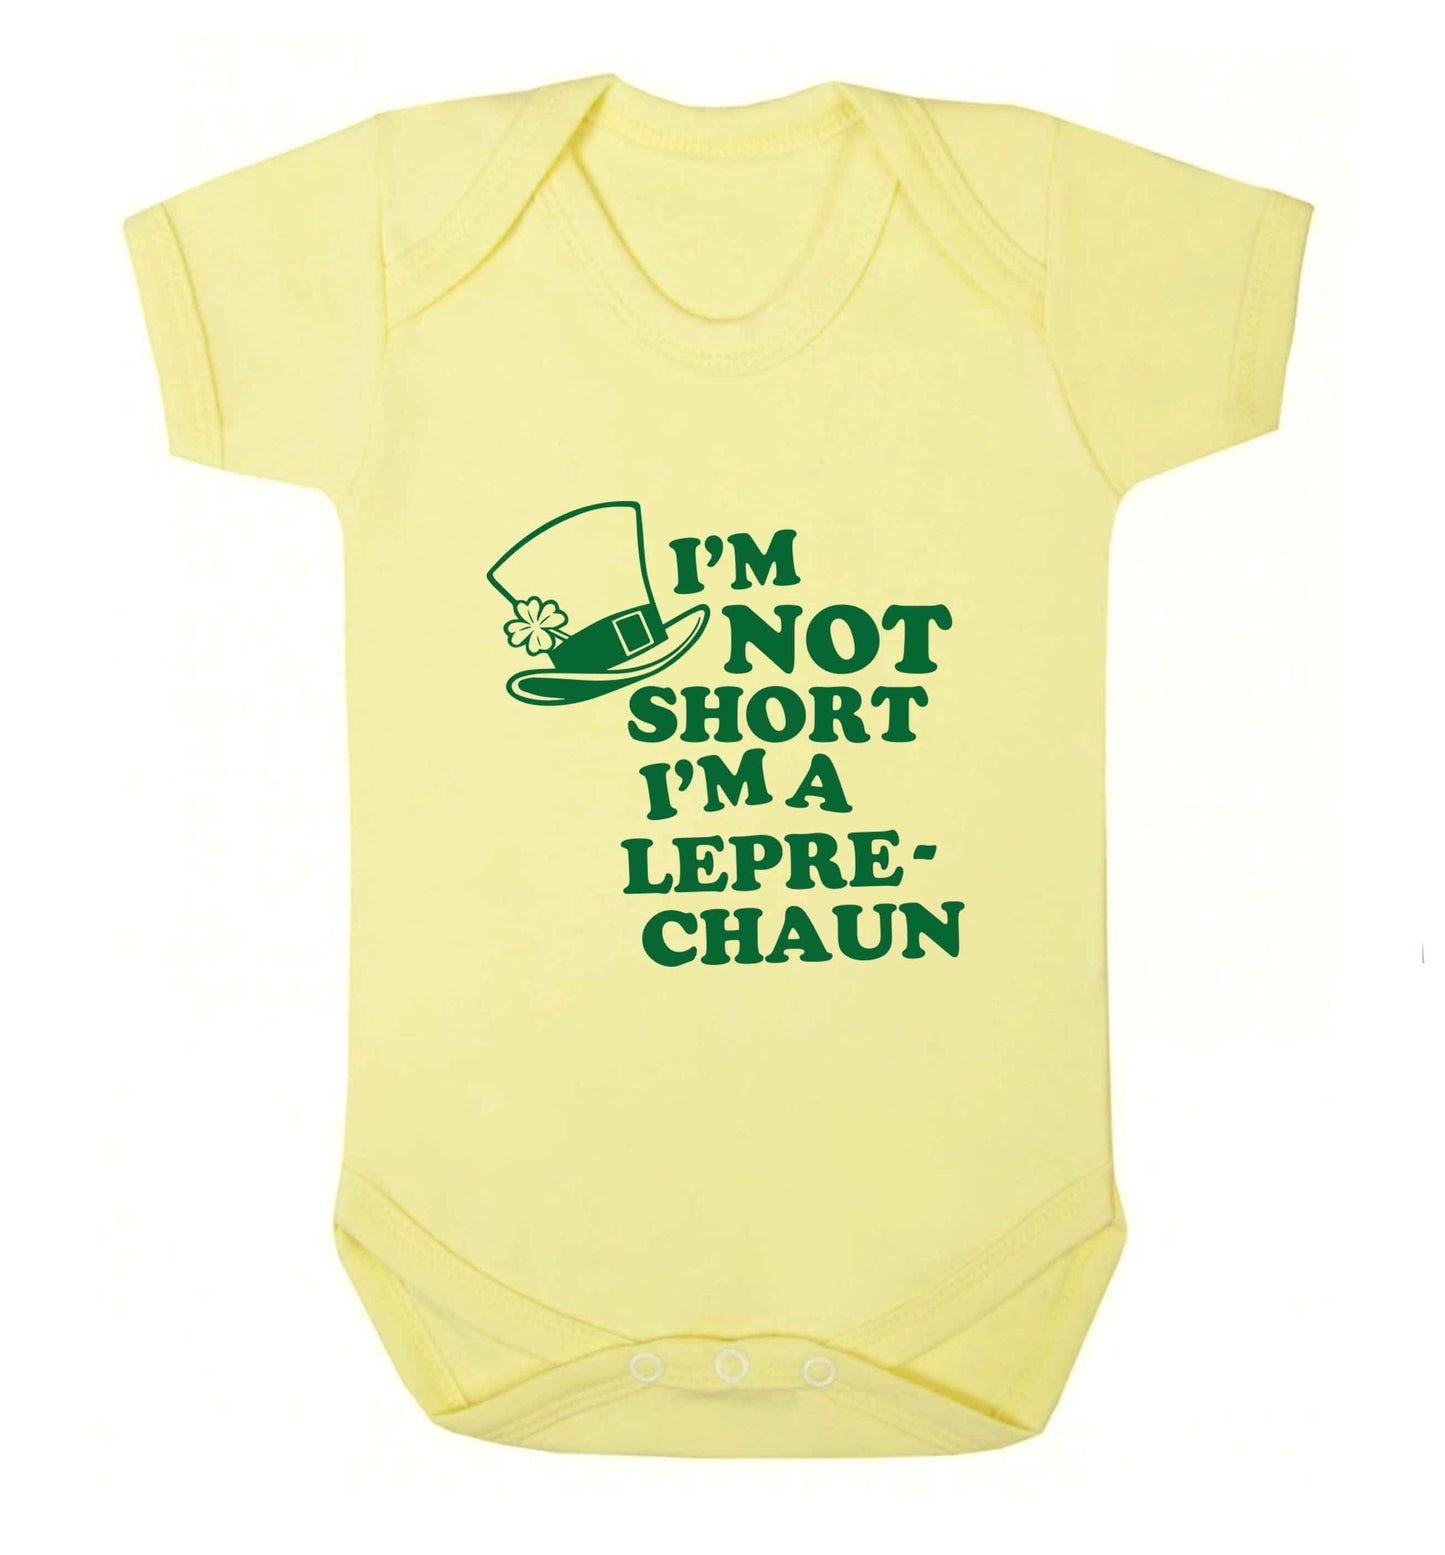 I'm not short I'm a leprechaun baby vest pale yellow 18-24 months